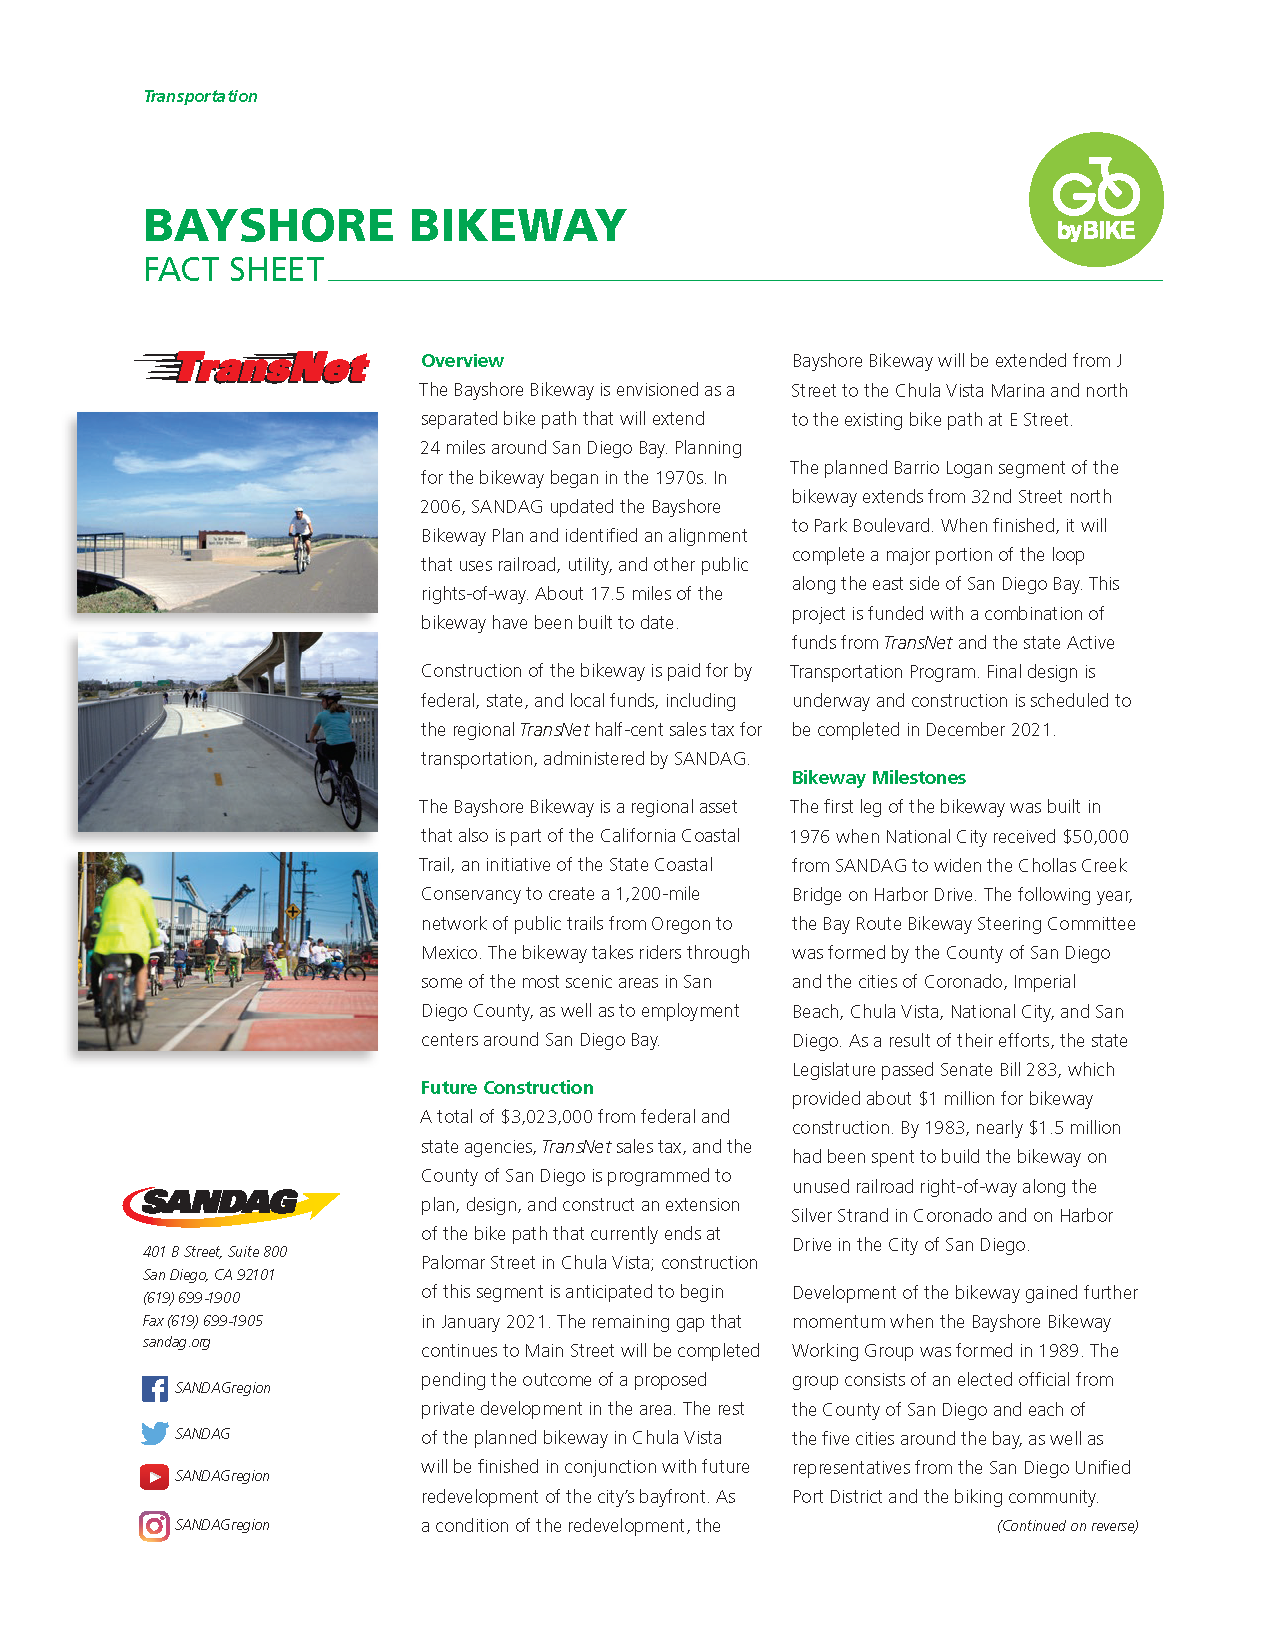 View the Bayshore Bikeway project fact sheet in English.